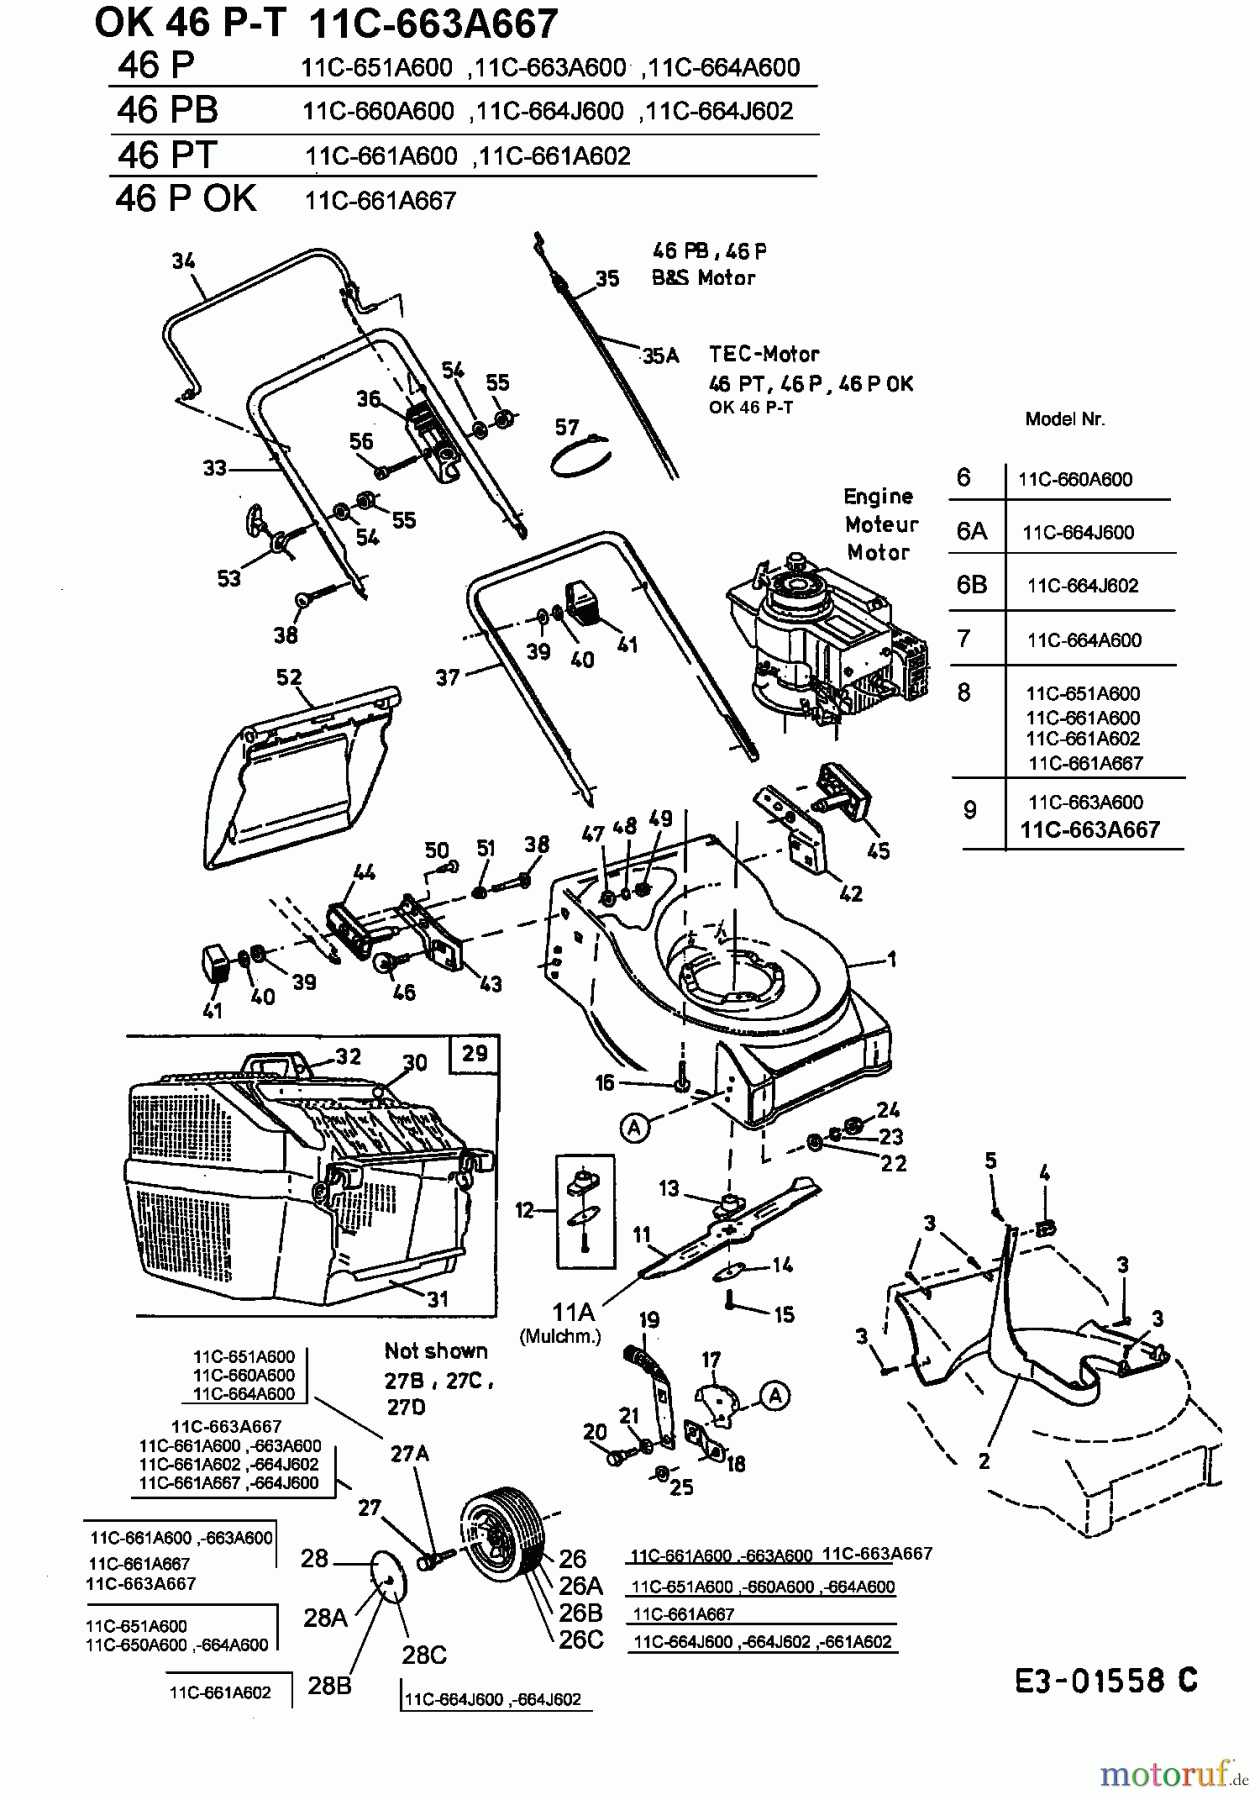  Ok Petrol mower 46 PT 11C-661A667  (2003) Basic machine